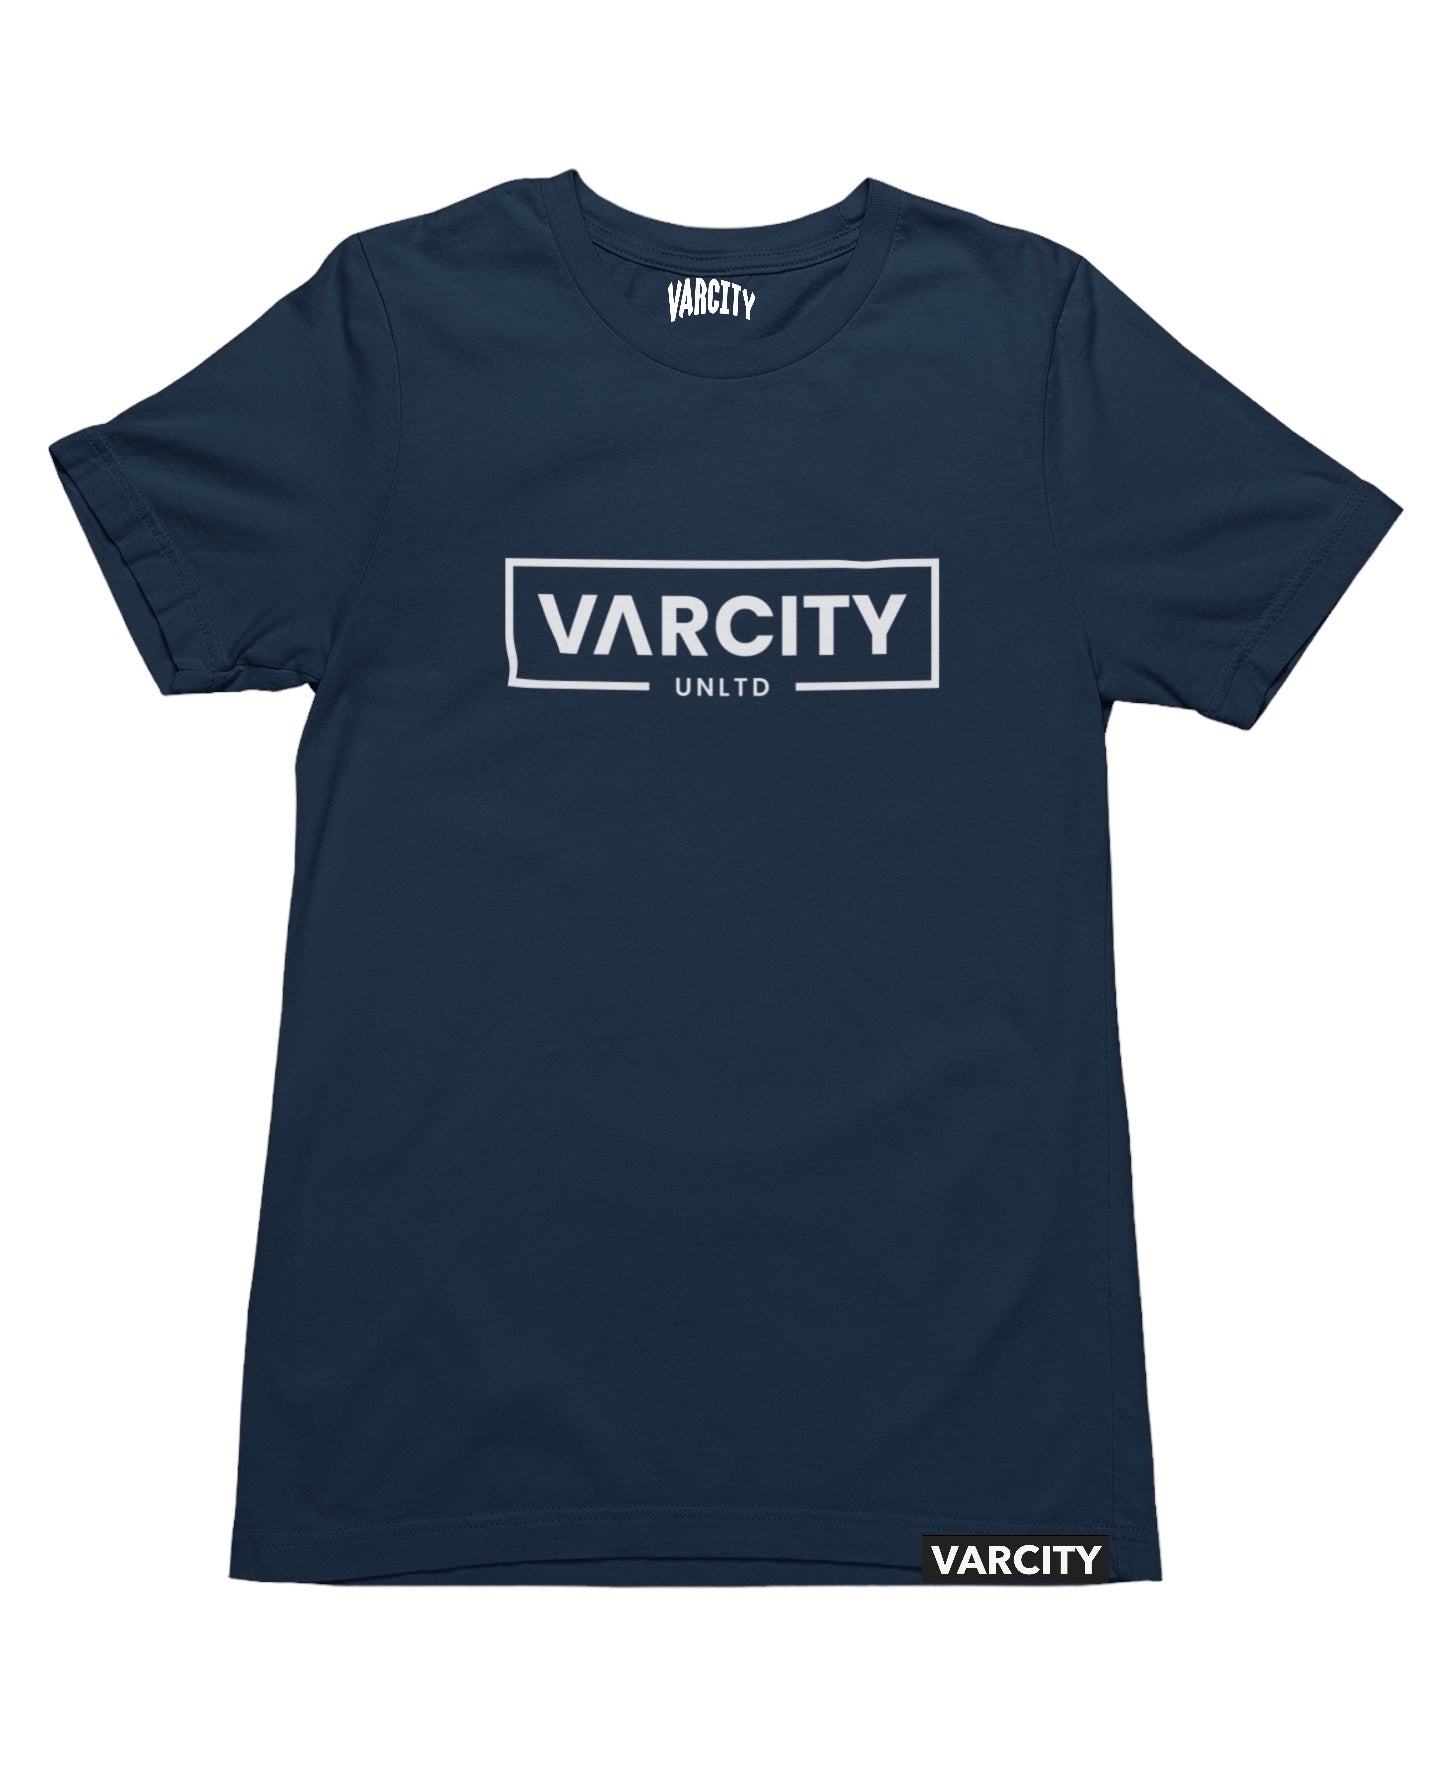 Freshmen Goats Live Rent Free Unisex T-Shirt - Varcity Unltd